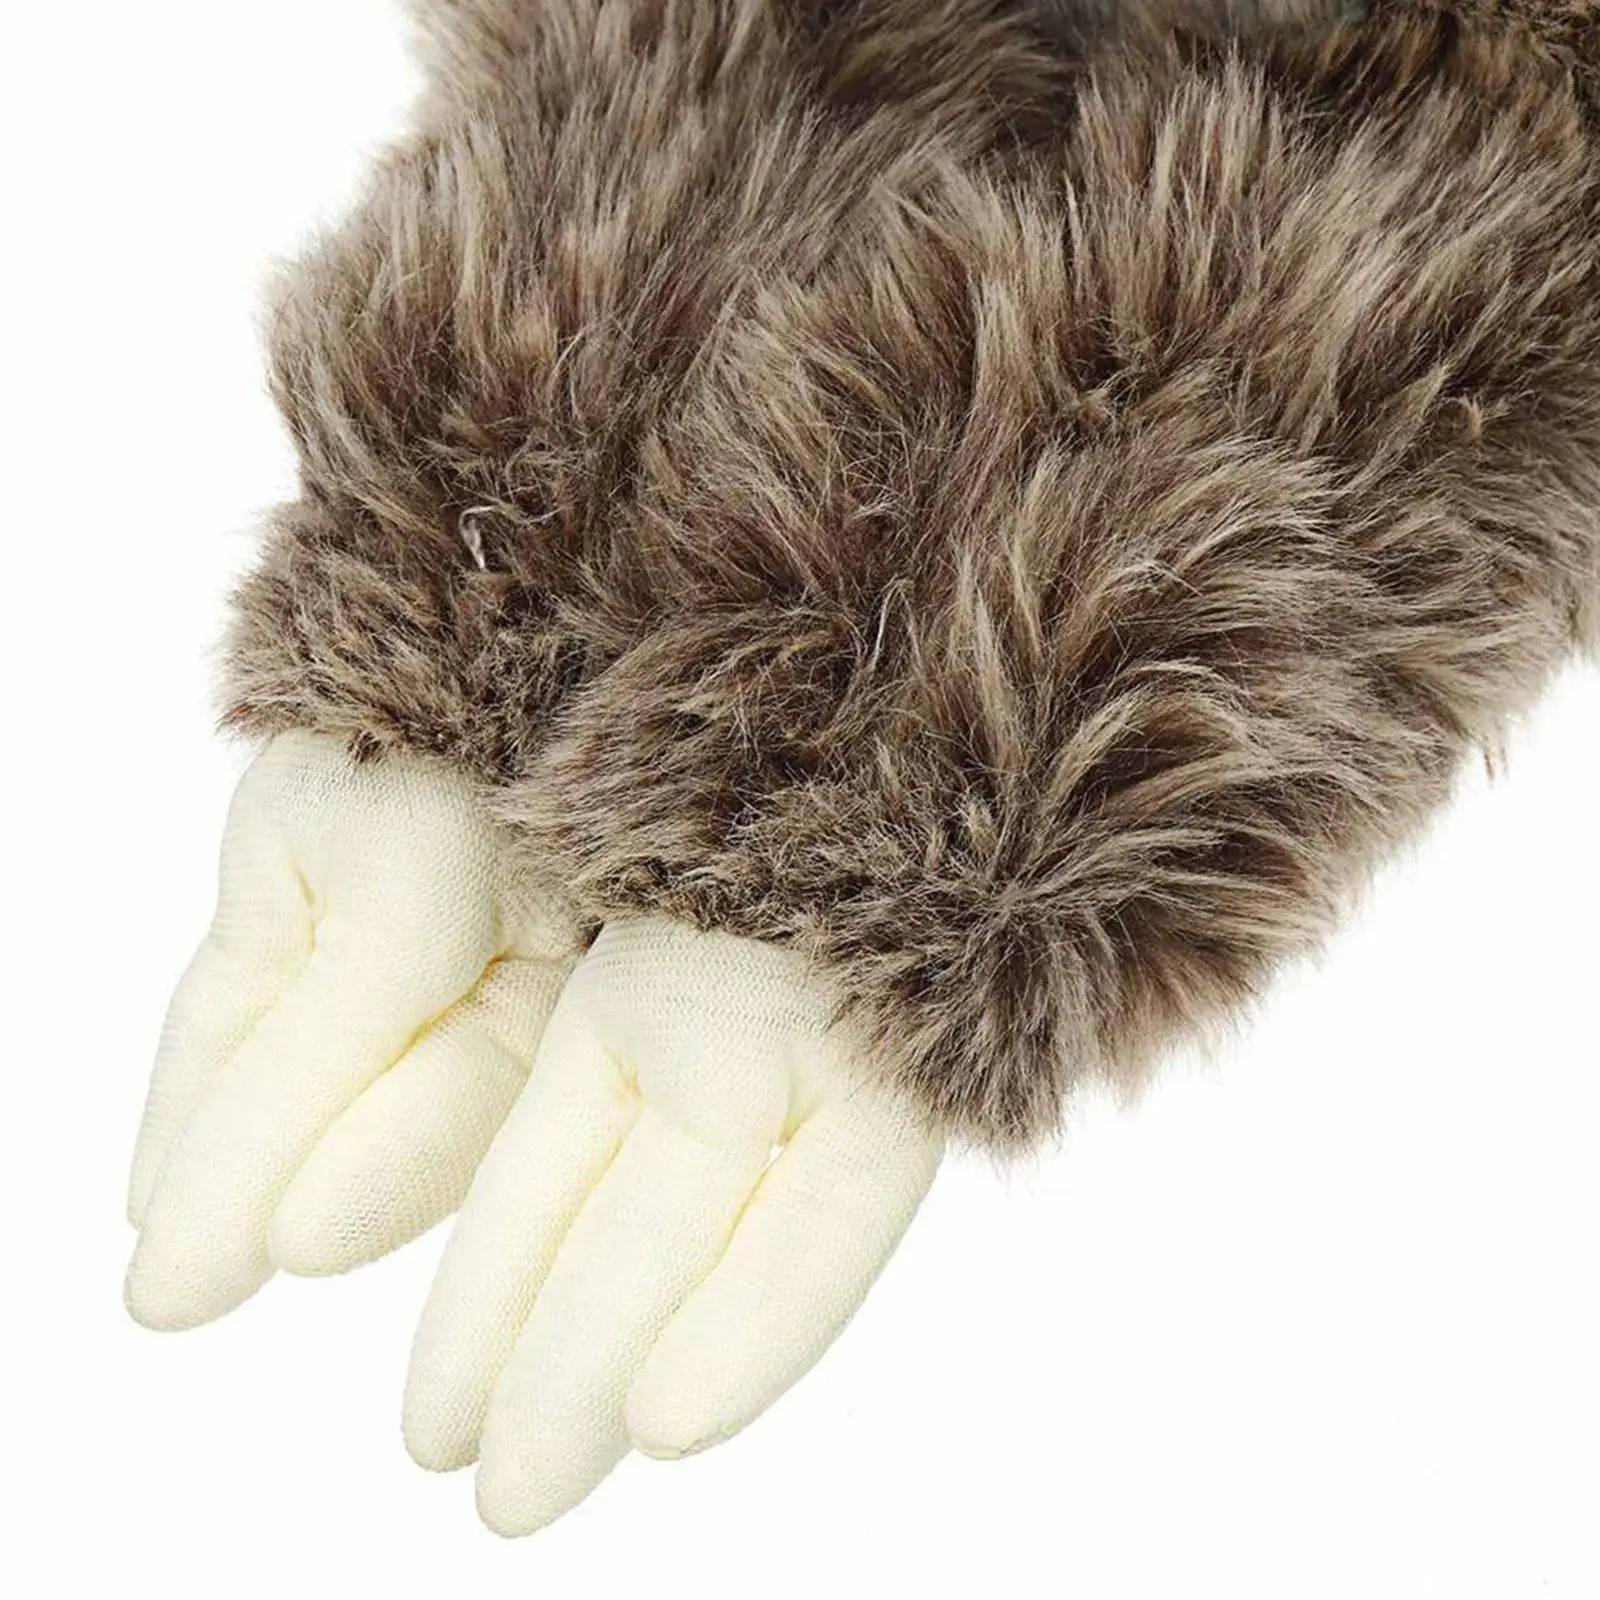 Realistic Sloth Stuffed Animal | 35cm Cute Realistic Three Toed Sloth Plush -8